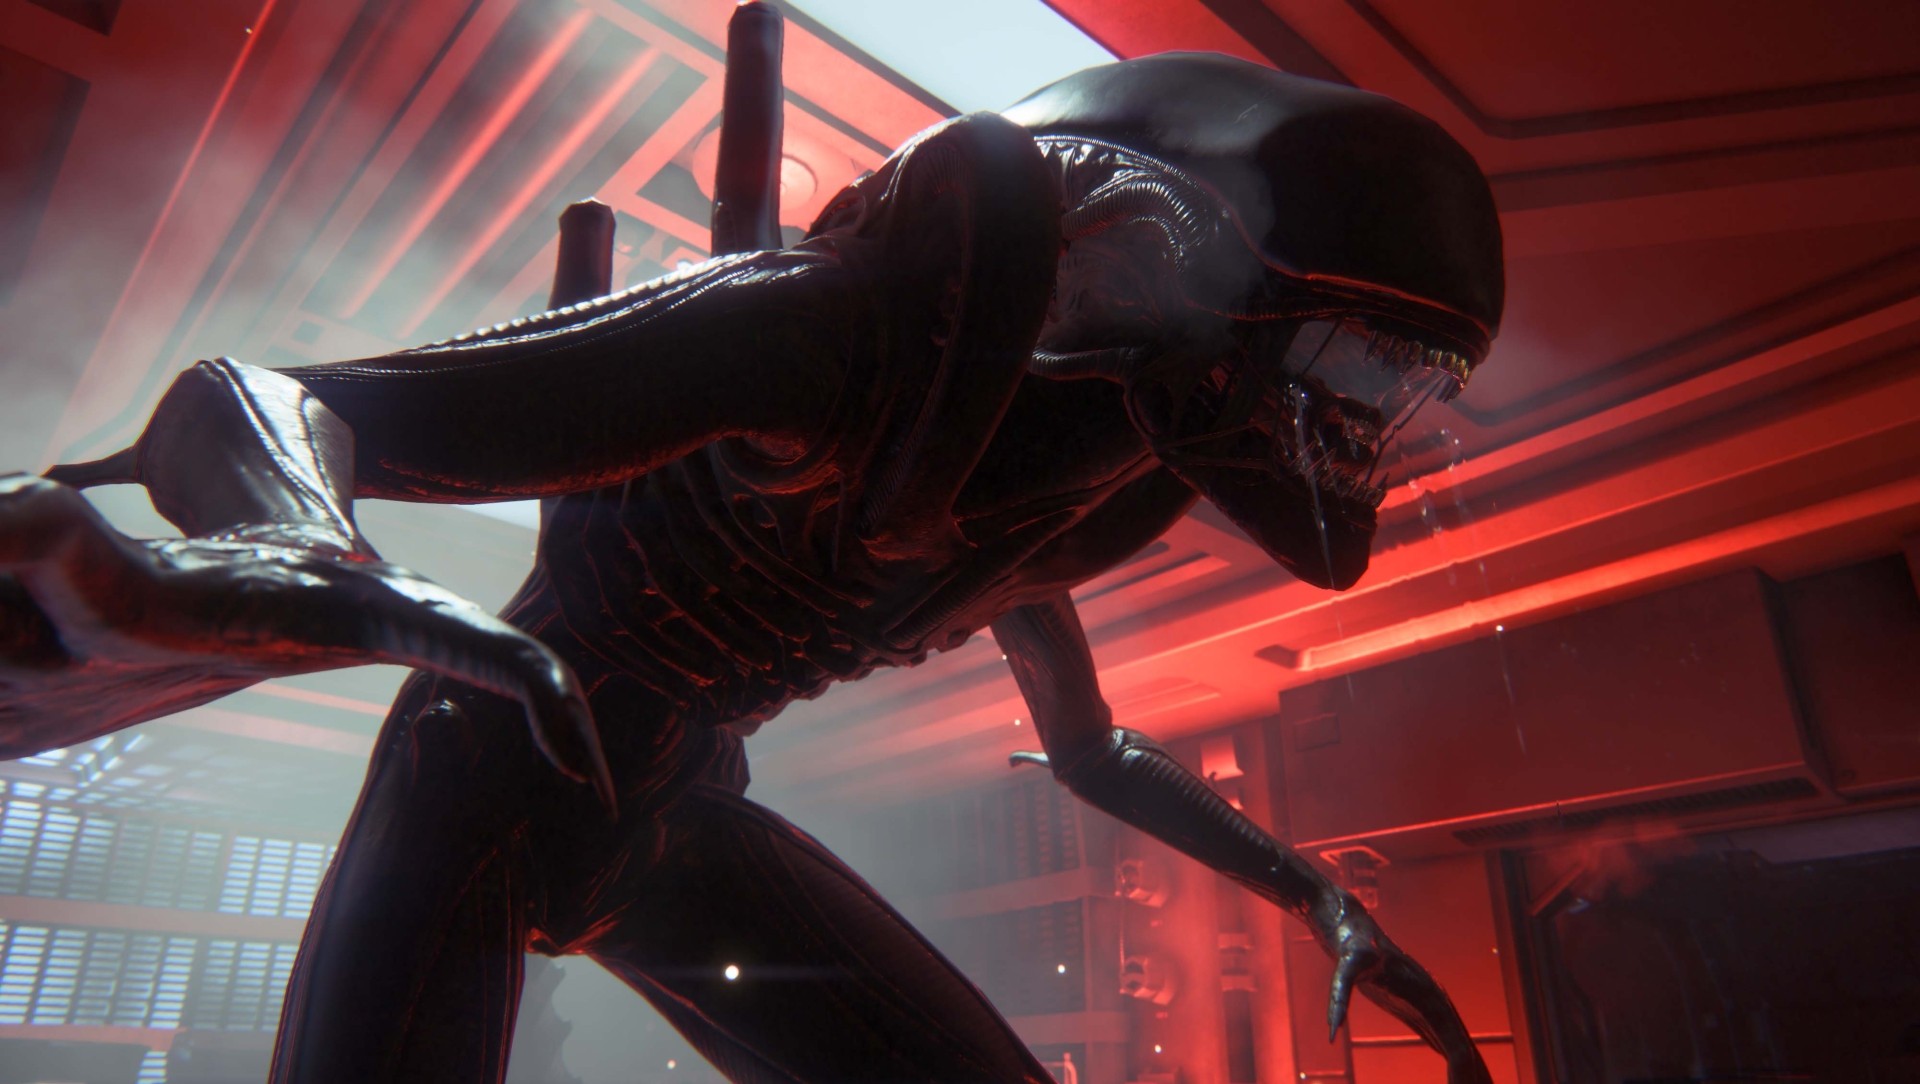 Alien: Isolation Collection on Steam